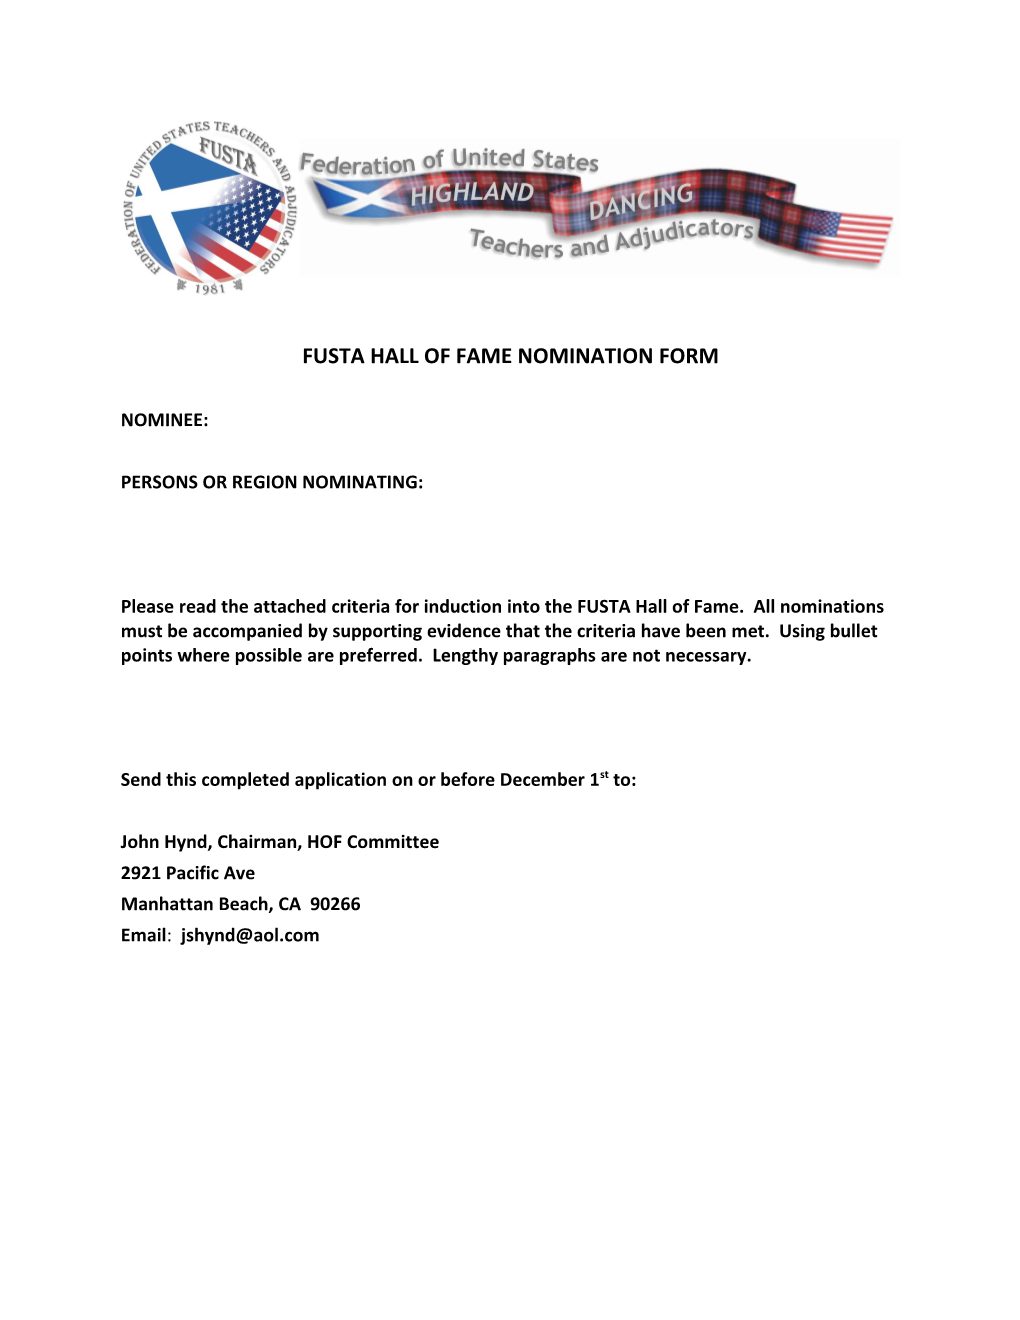 Fusta Hall of Fame Nomination Form